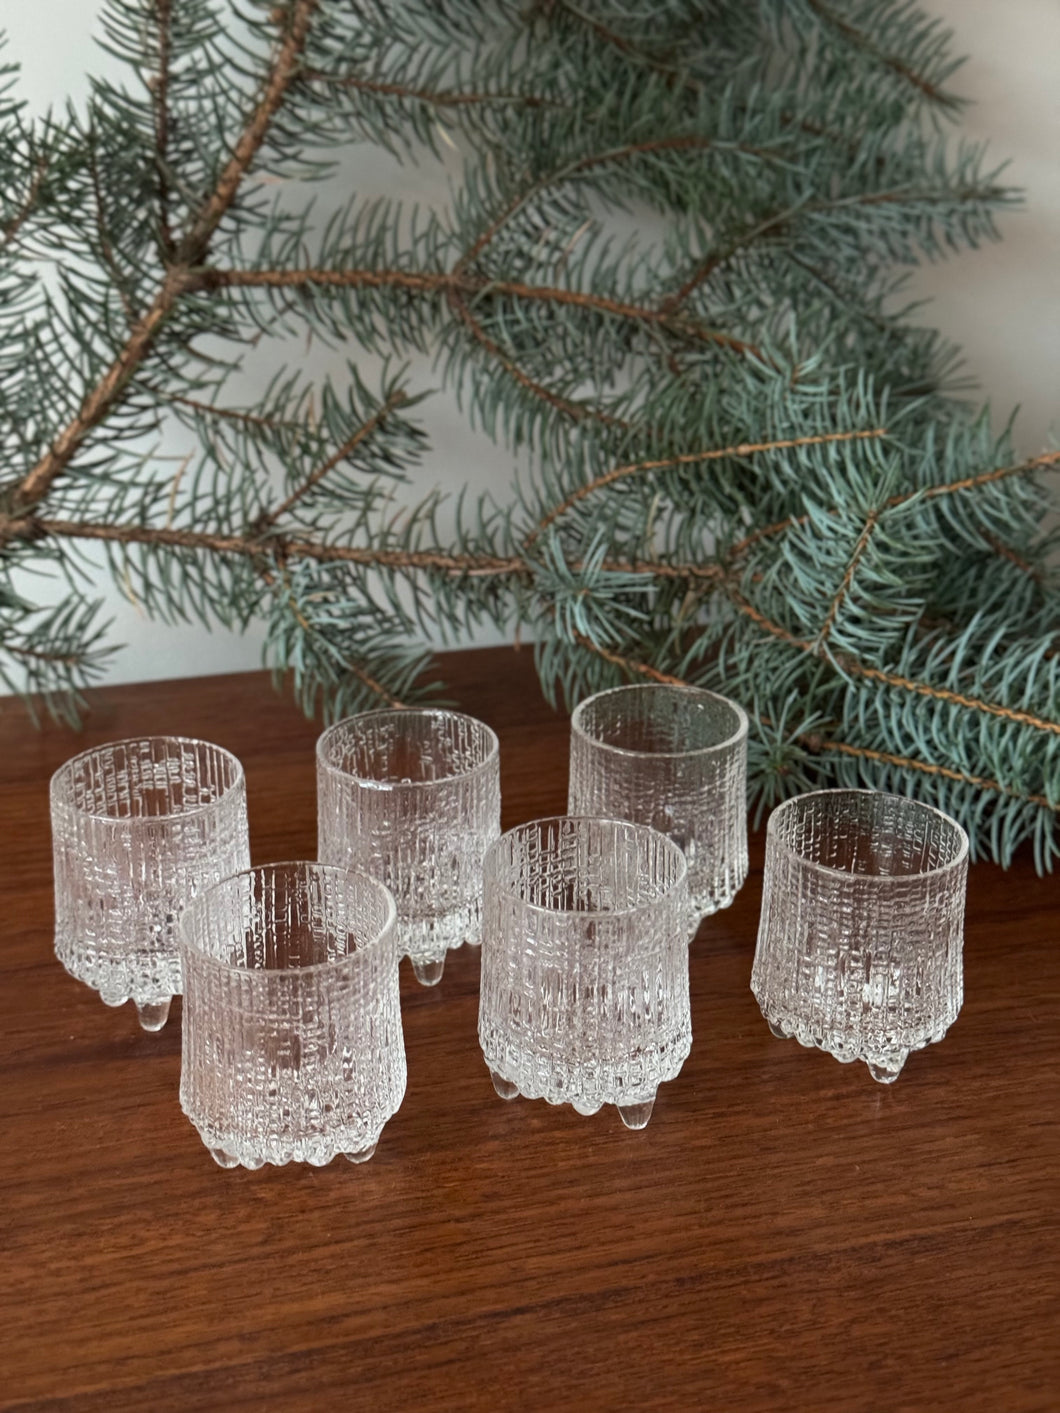 Set of 6 Ultima Thule shot glasses by Iittala